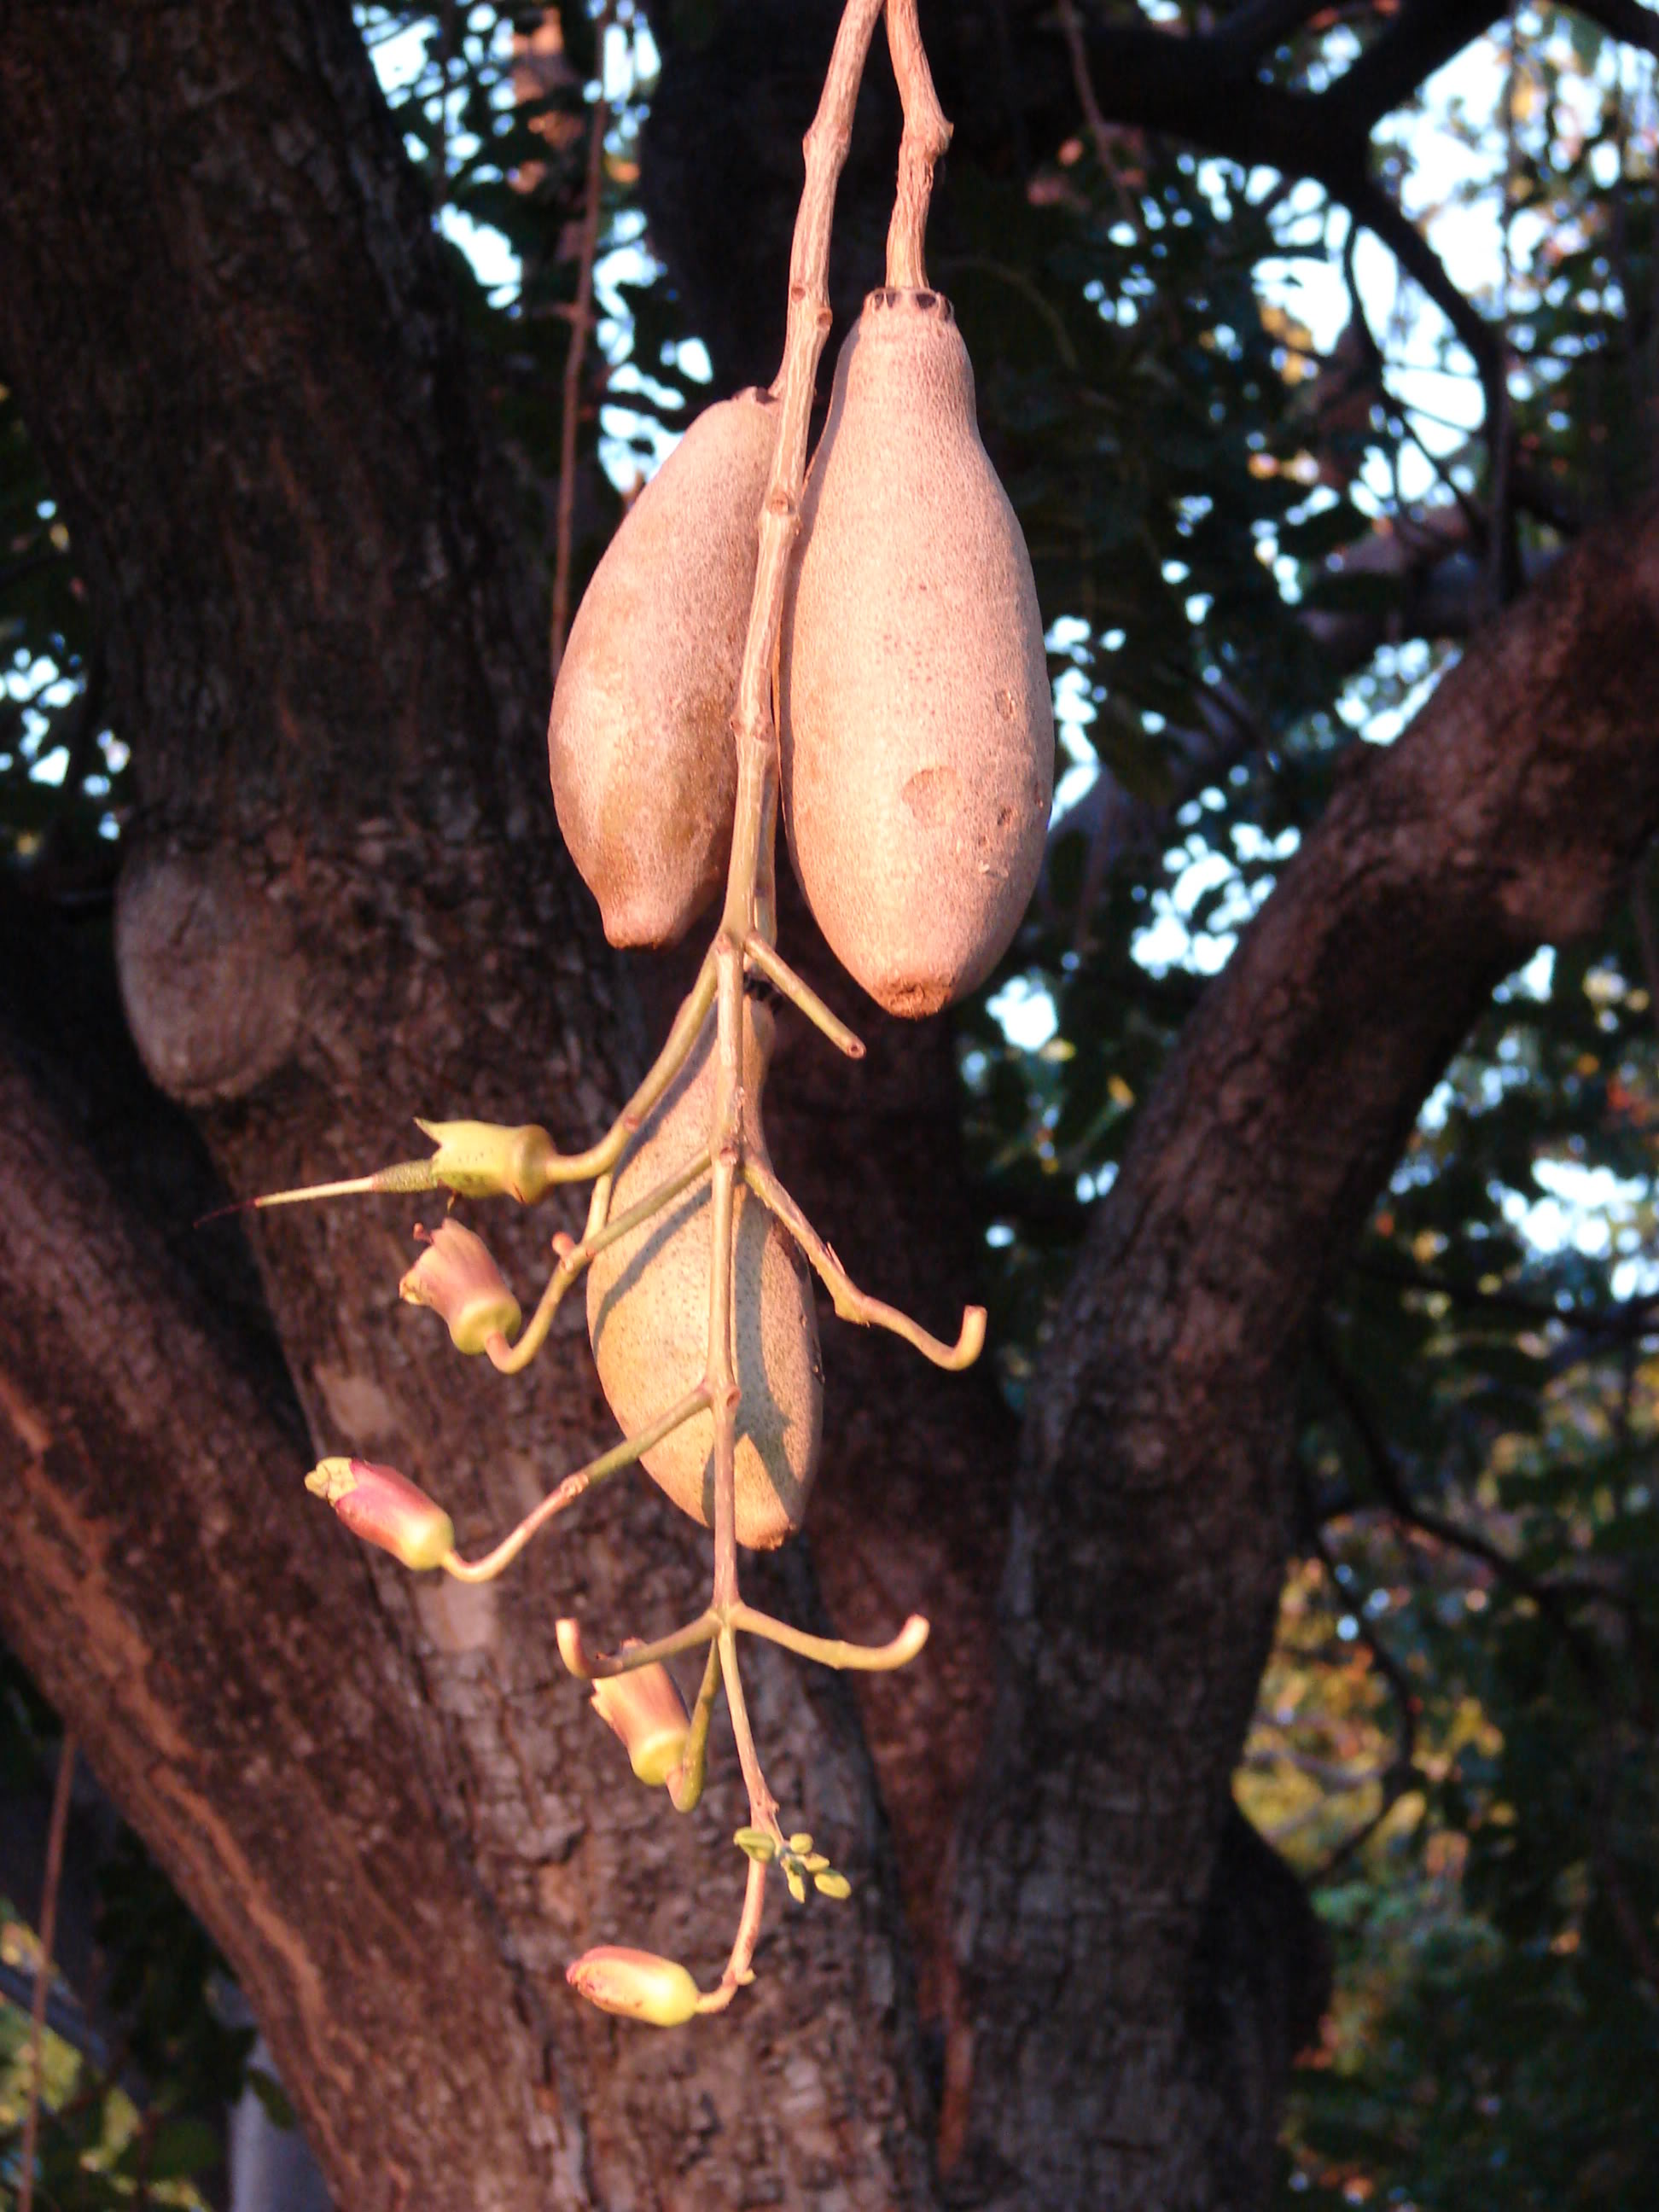 Sausage Tree
Kigelia africana